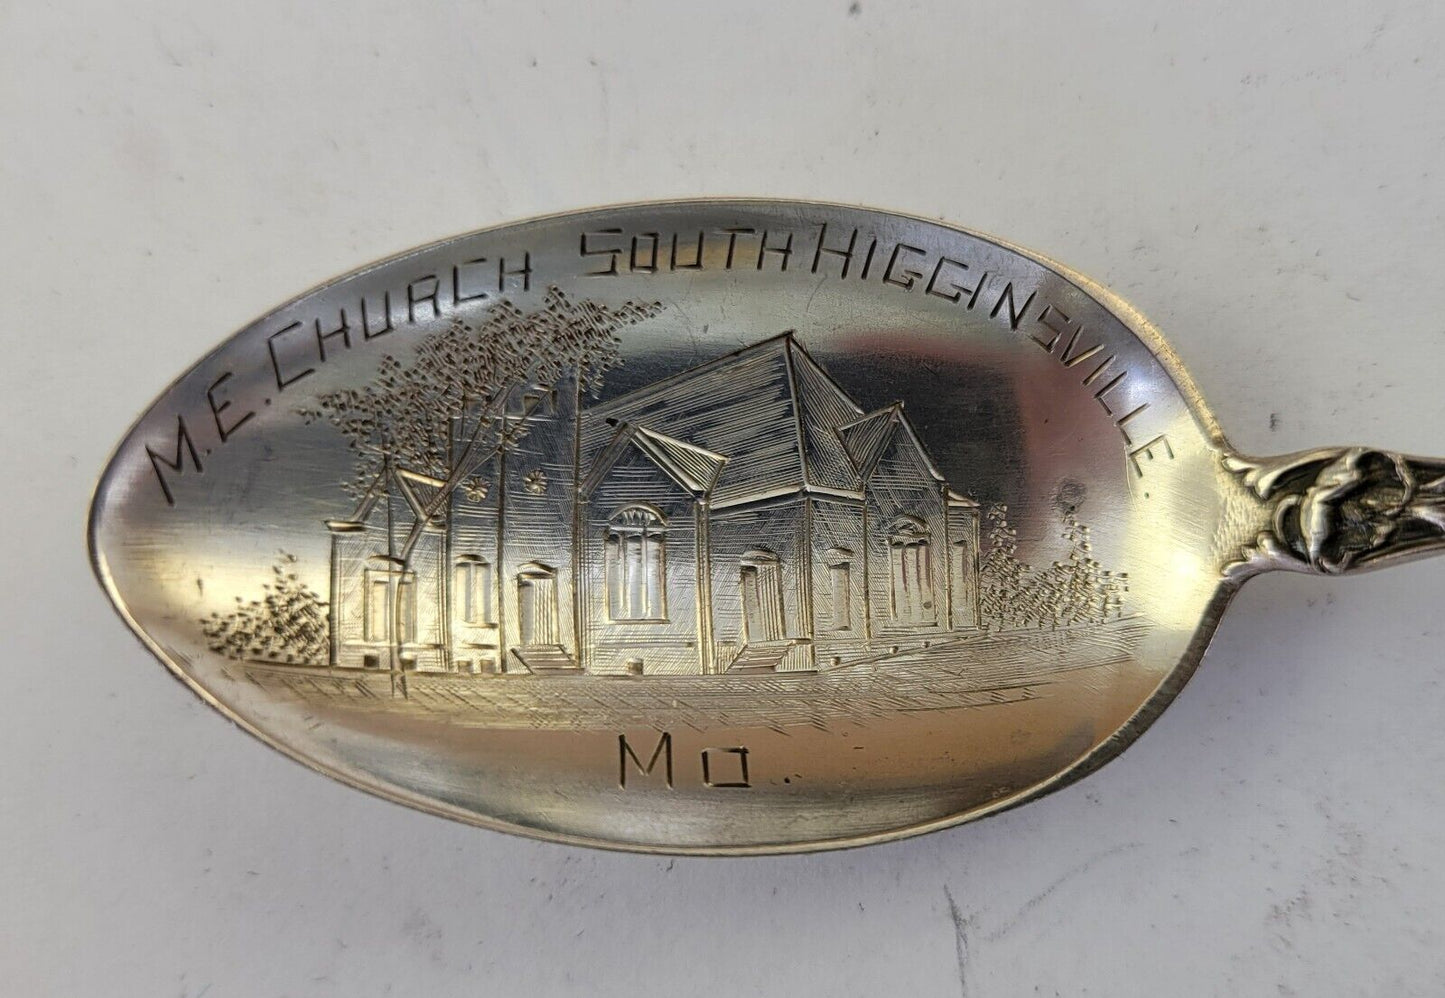 M.E. Church South Higginsville Missouri 5 1/8" Sterling Souvenir Spoon .46oz.